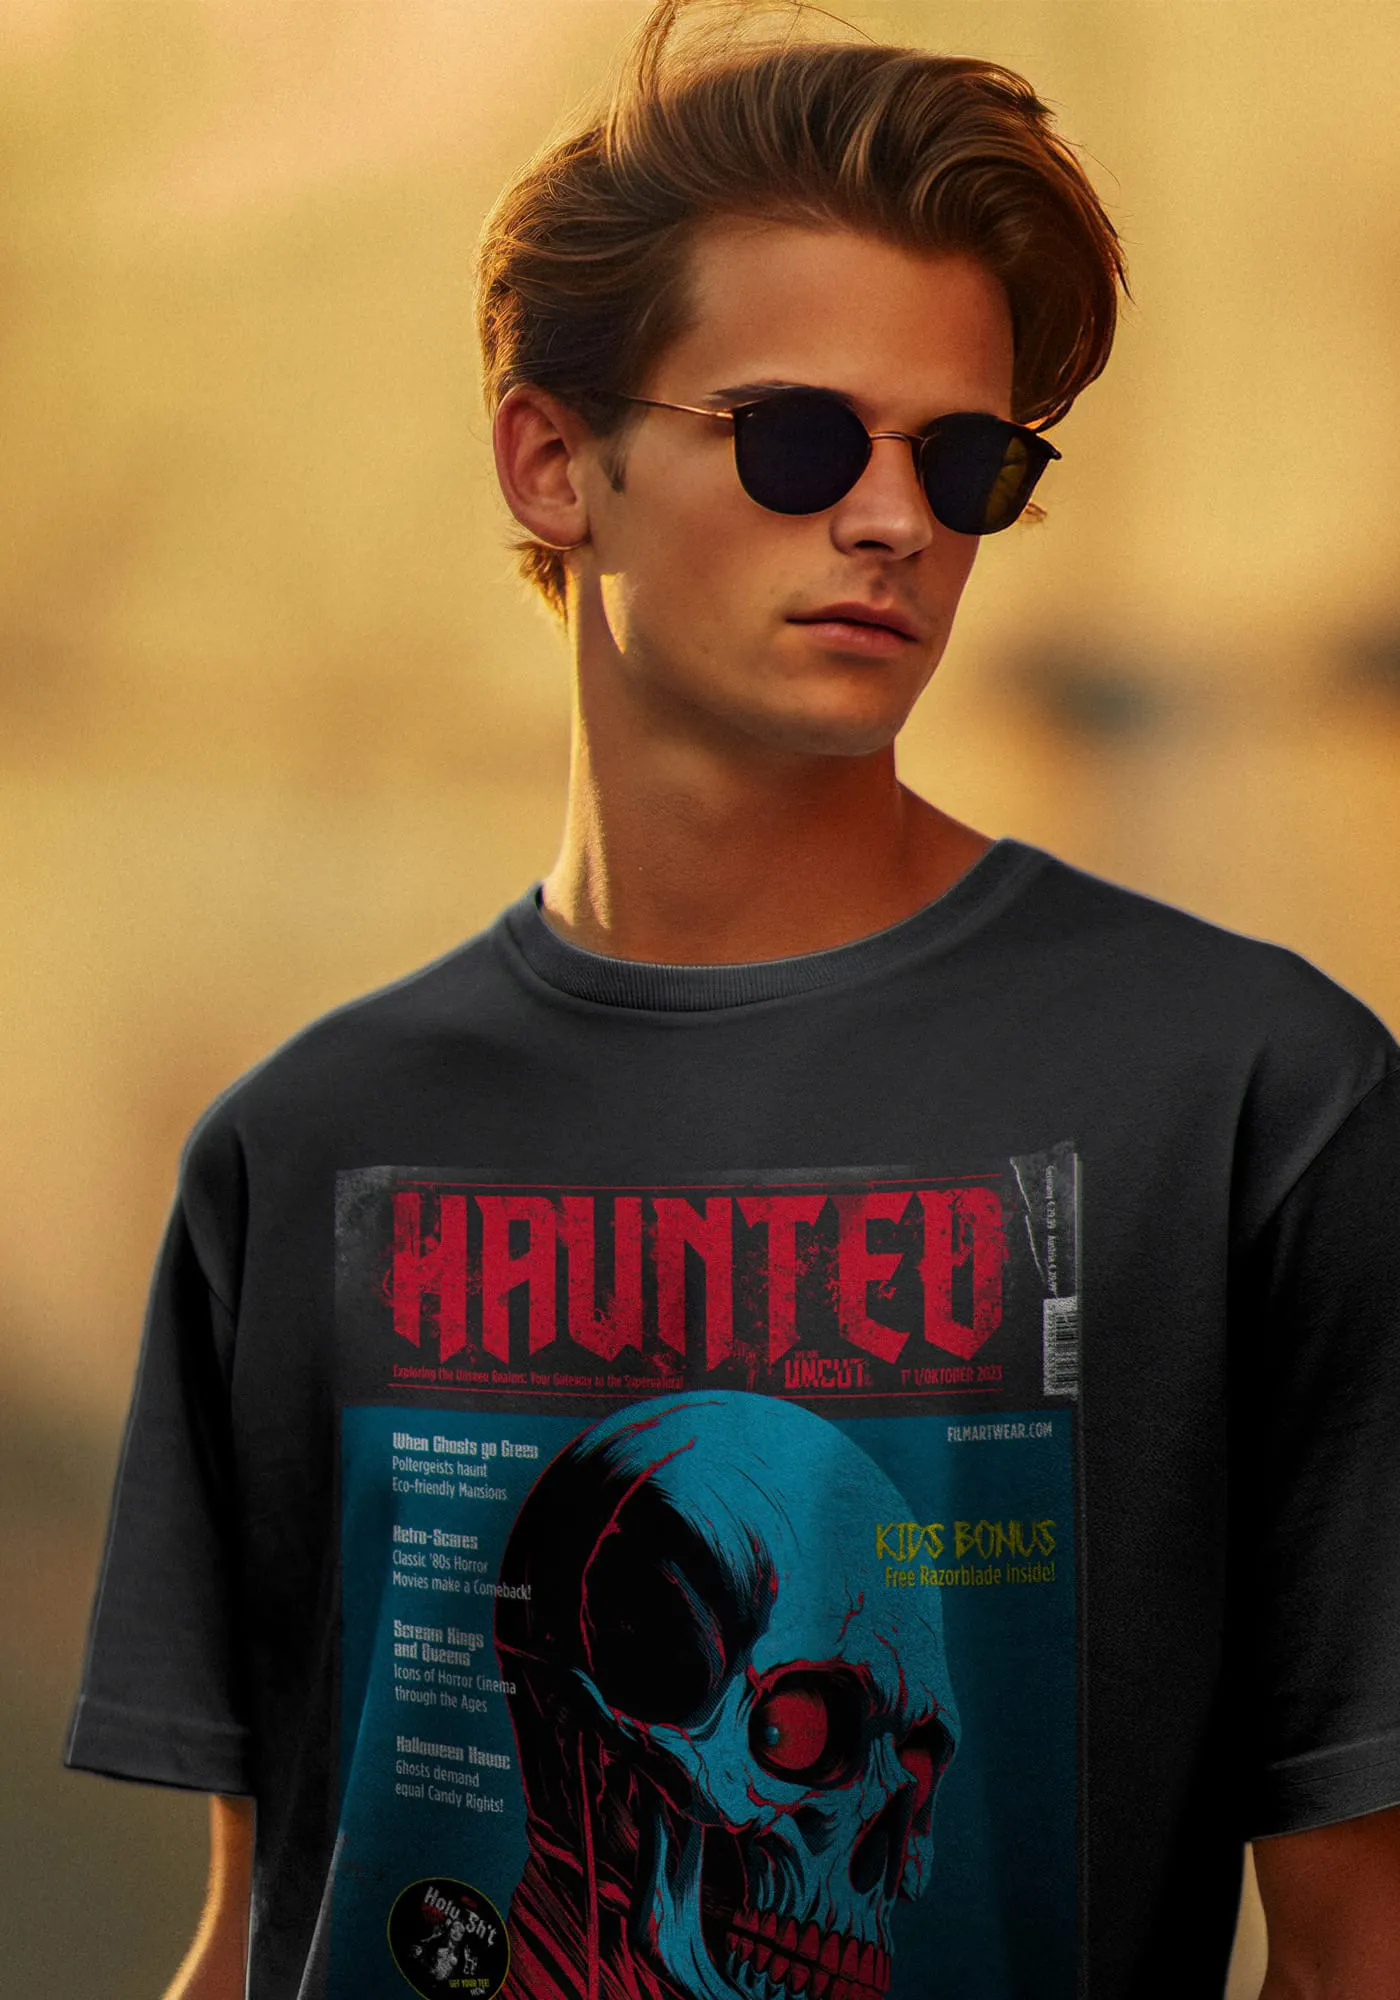 schwarzes Totenkopf T-Shirt kaufen Haunted getragen von Model Jordan